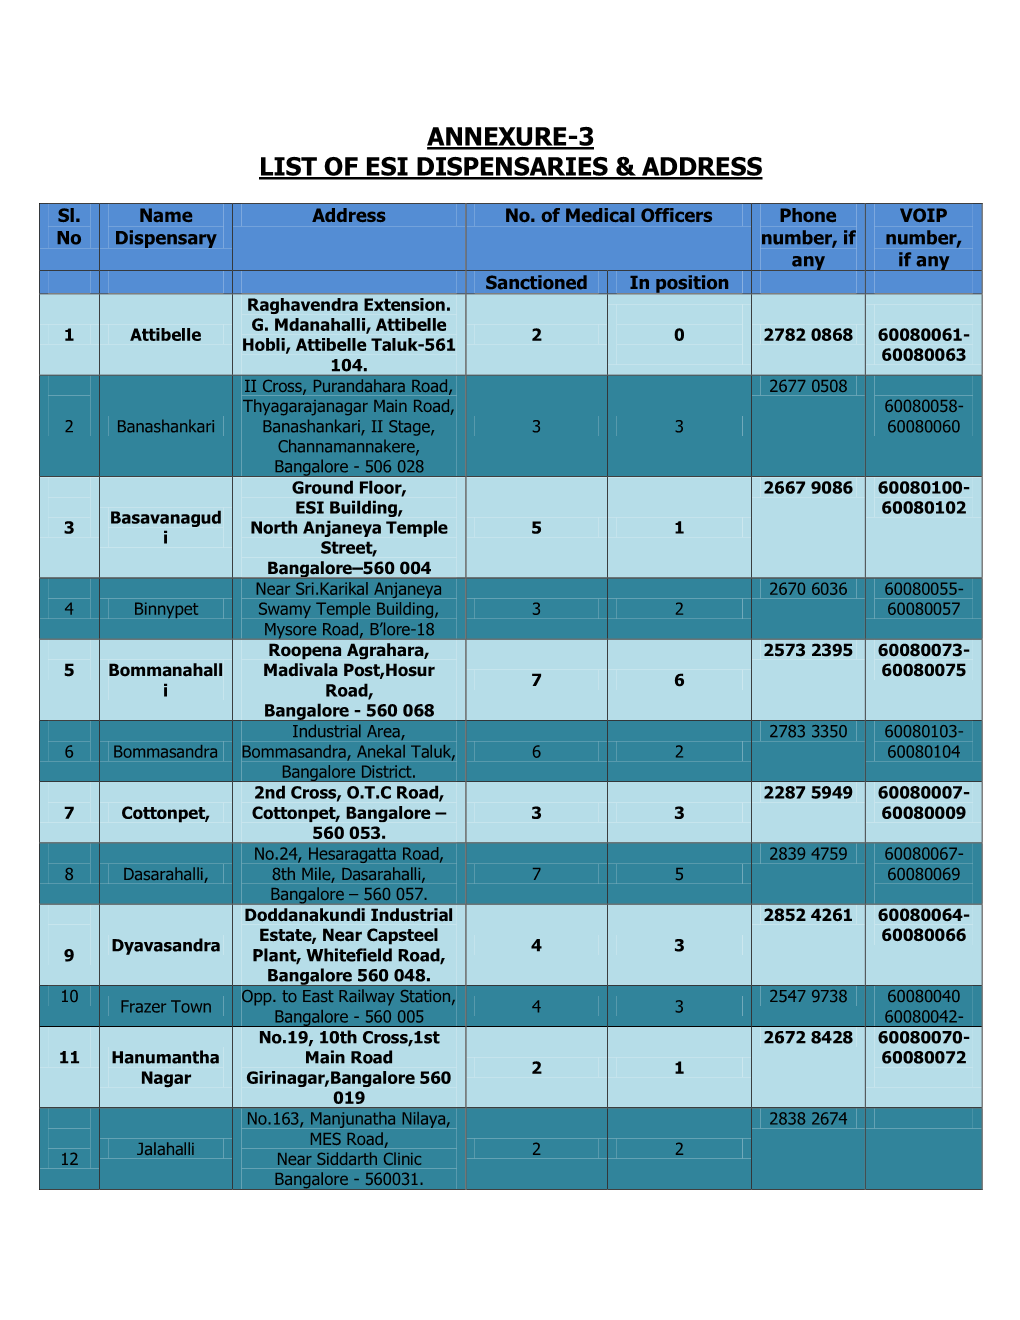 Annexure-3 List of Esi Dispensaries & Address